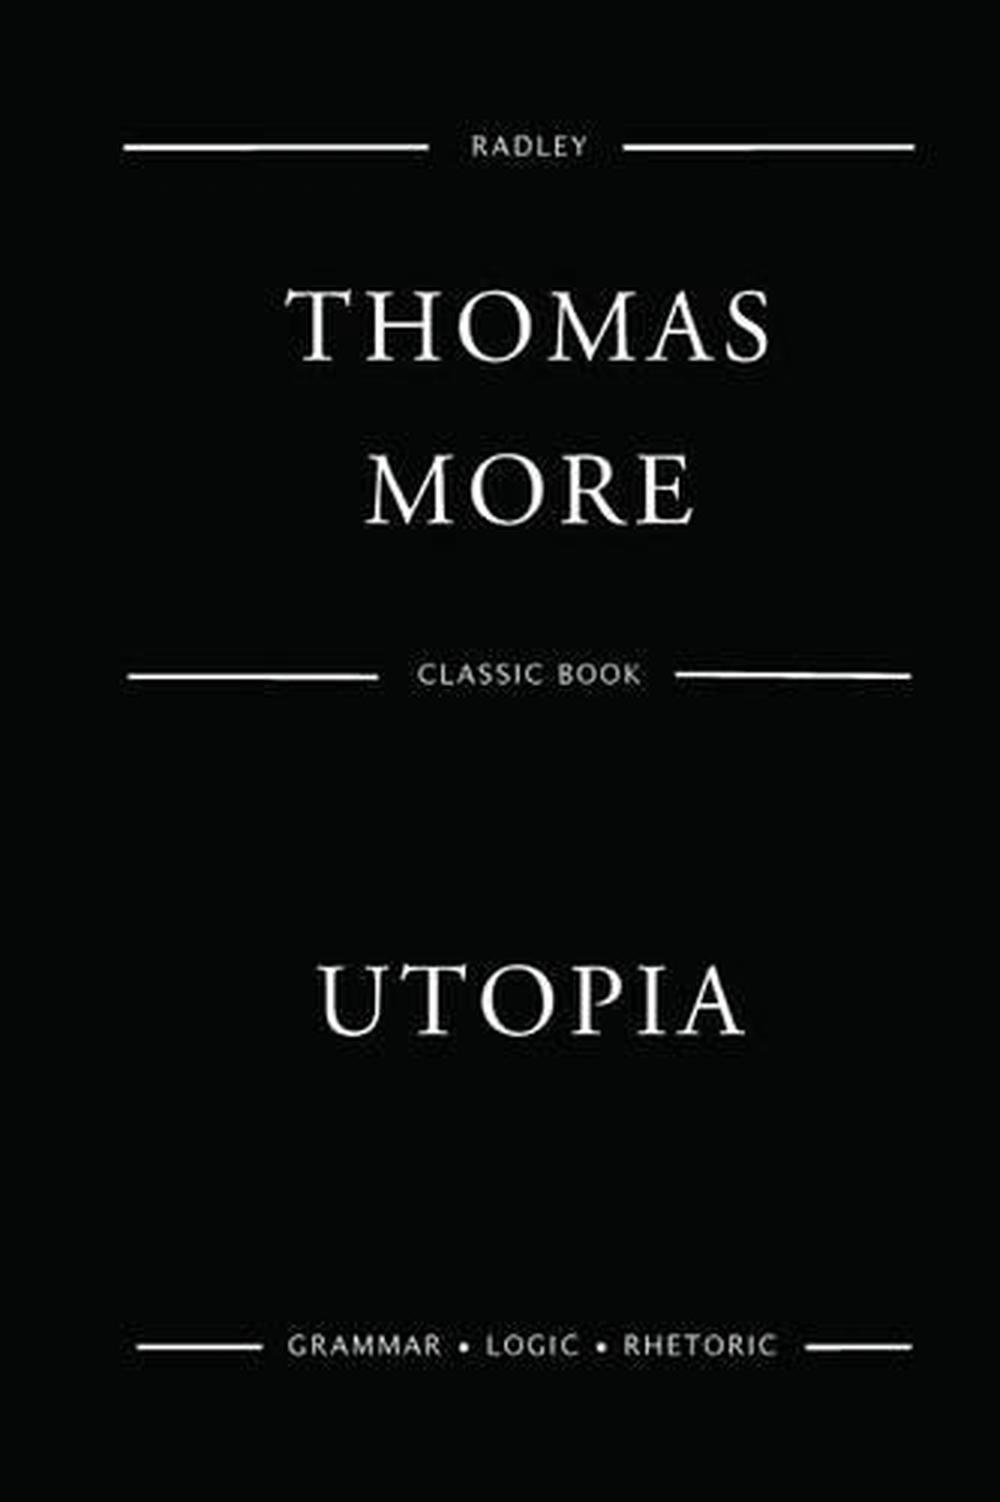 utopia thomas more paul turner pdf